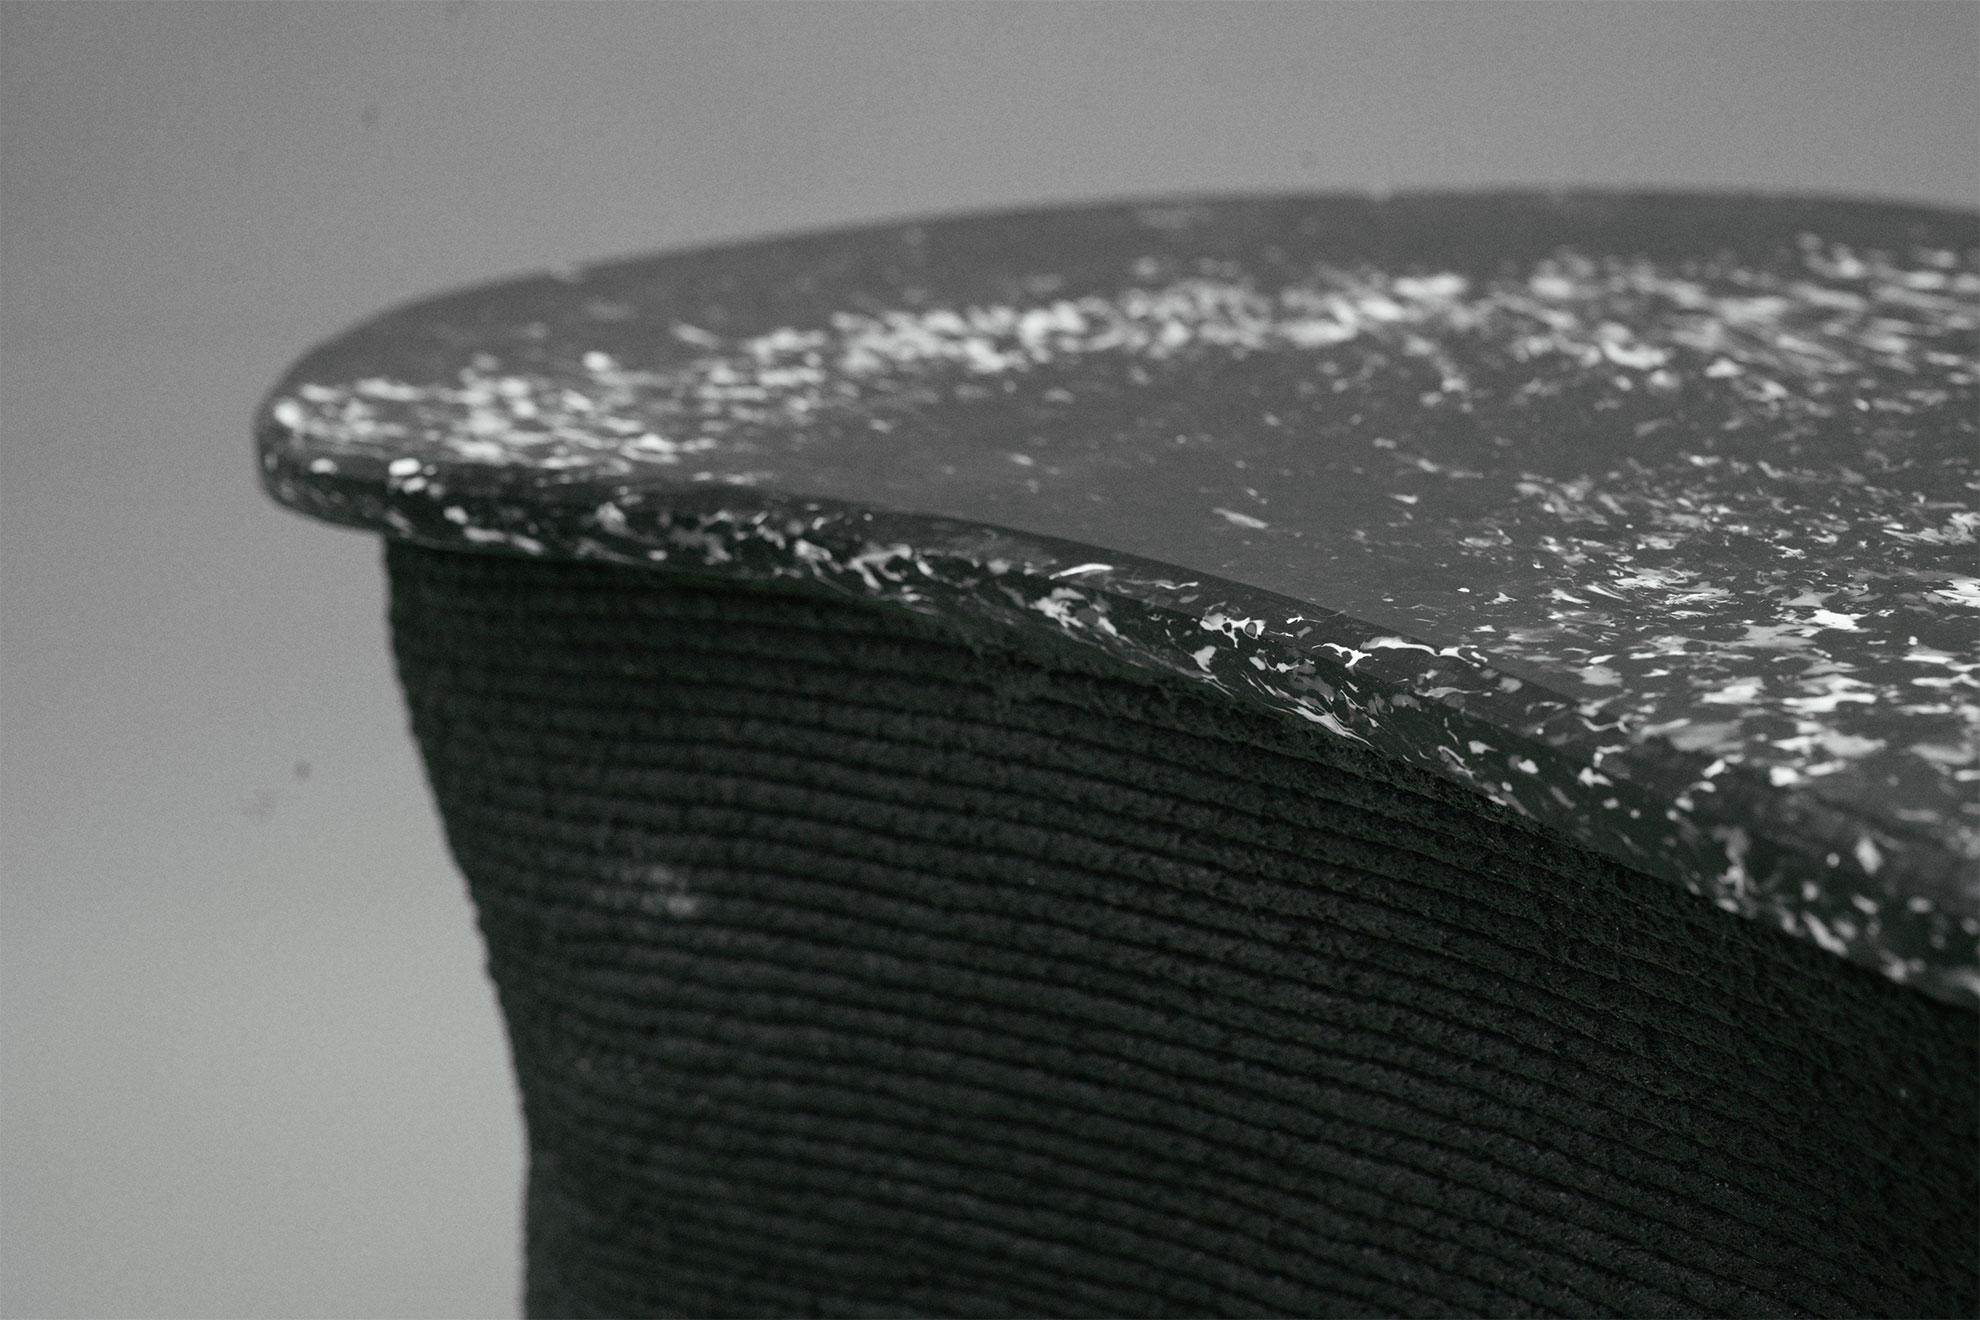 Taisan Bench Single designed by Lowlit Collective

Award Winning Design
Dezeen Award 2022 Furniture Longlist
2023 iF Design Award Public Design

Material
Locally sourced PCR, PIR polypropylene and polyethylene

Tecniques
Heat press, 3D